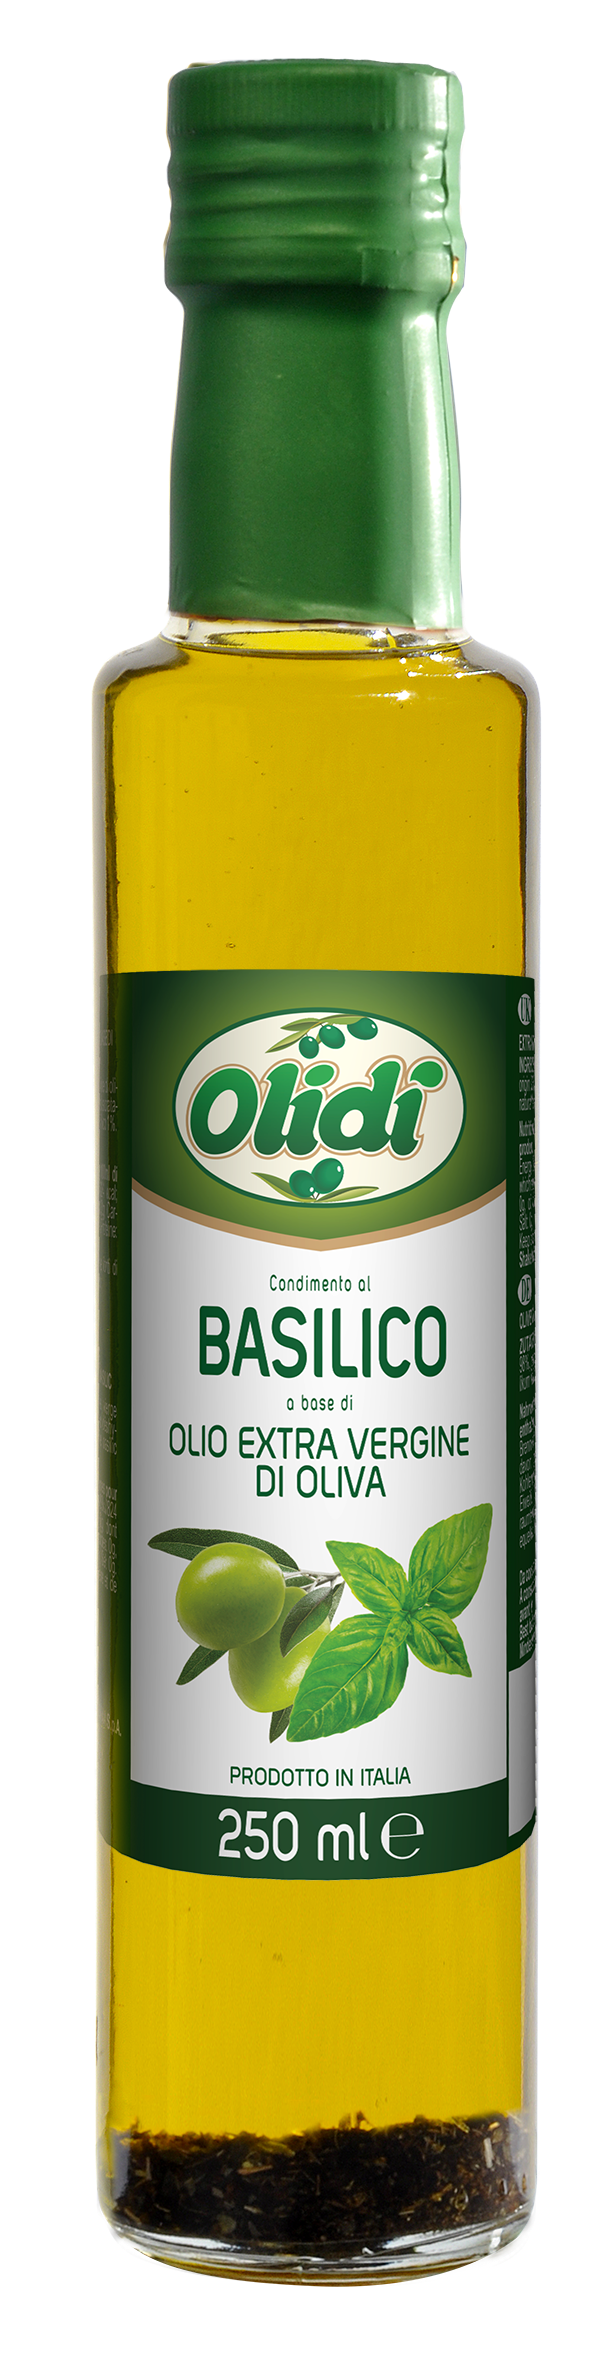 Olidi' Basil Olive Oil